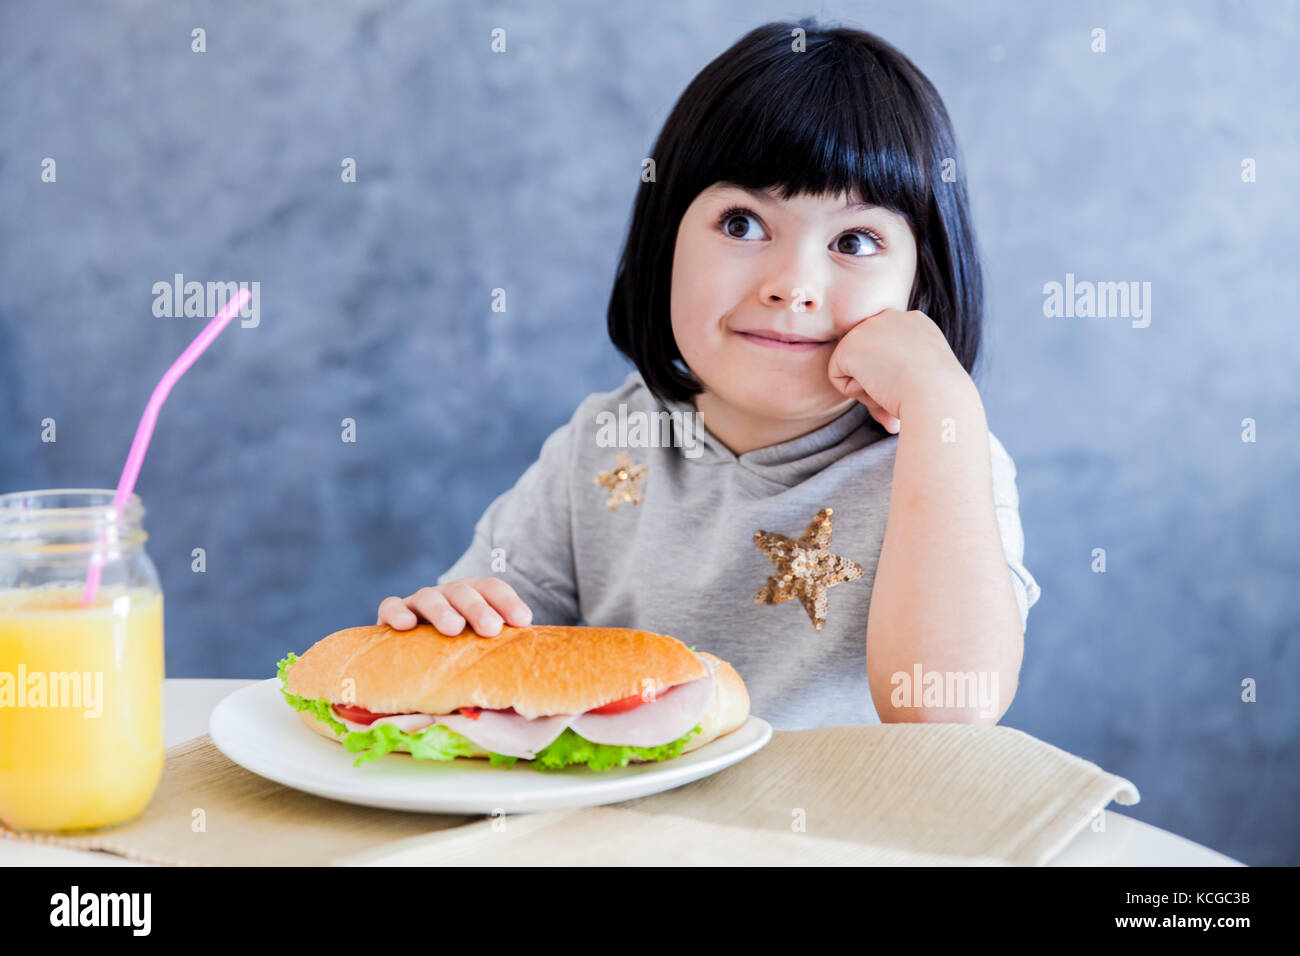 Lindo cabello negro niña comiendo sandwich en casa Foto de stock